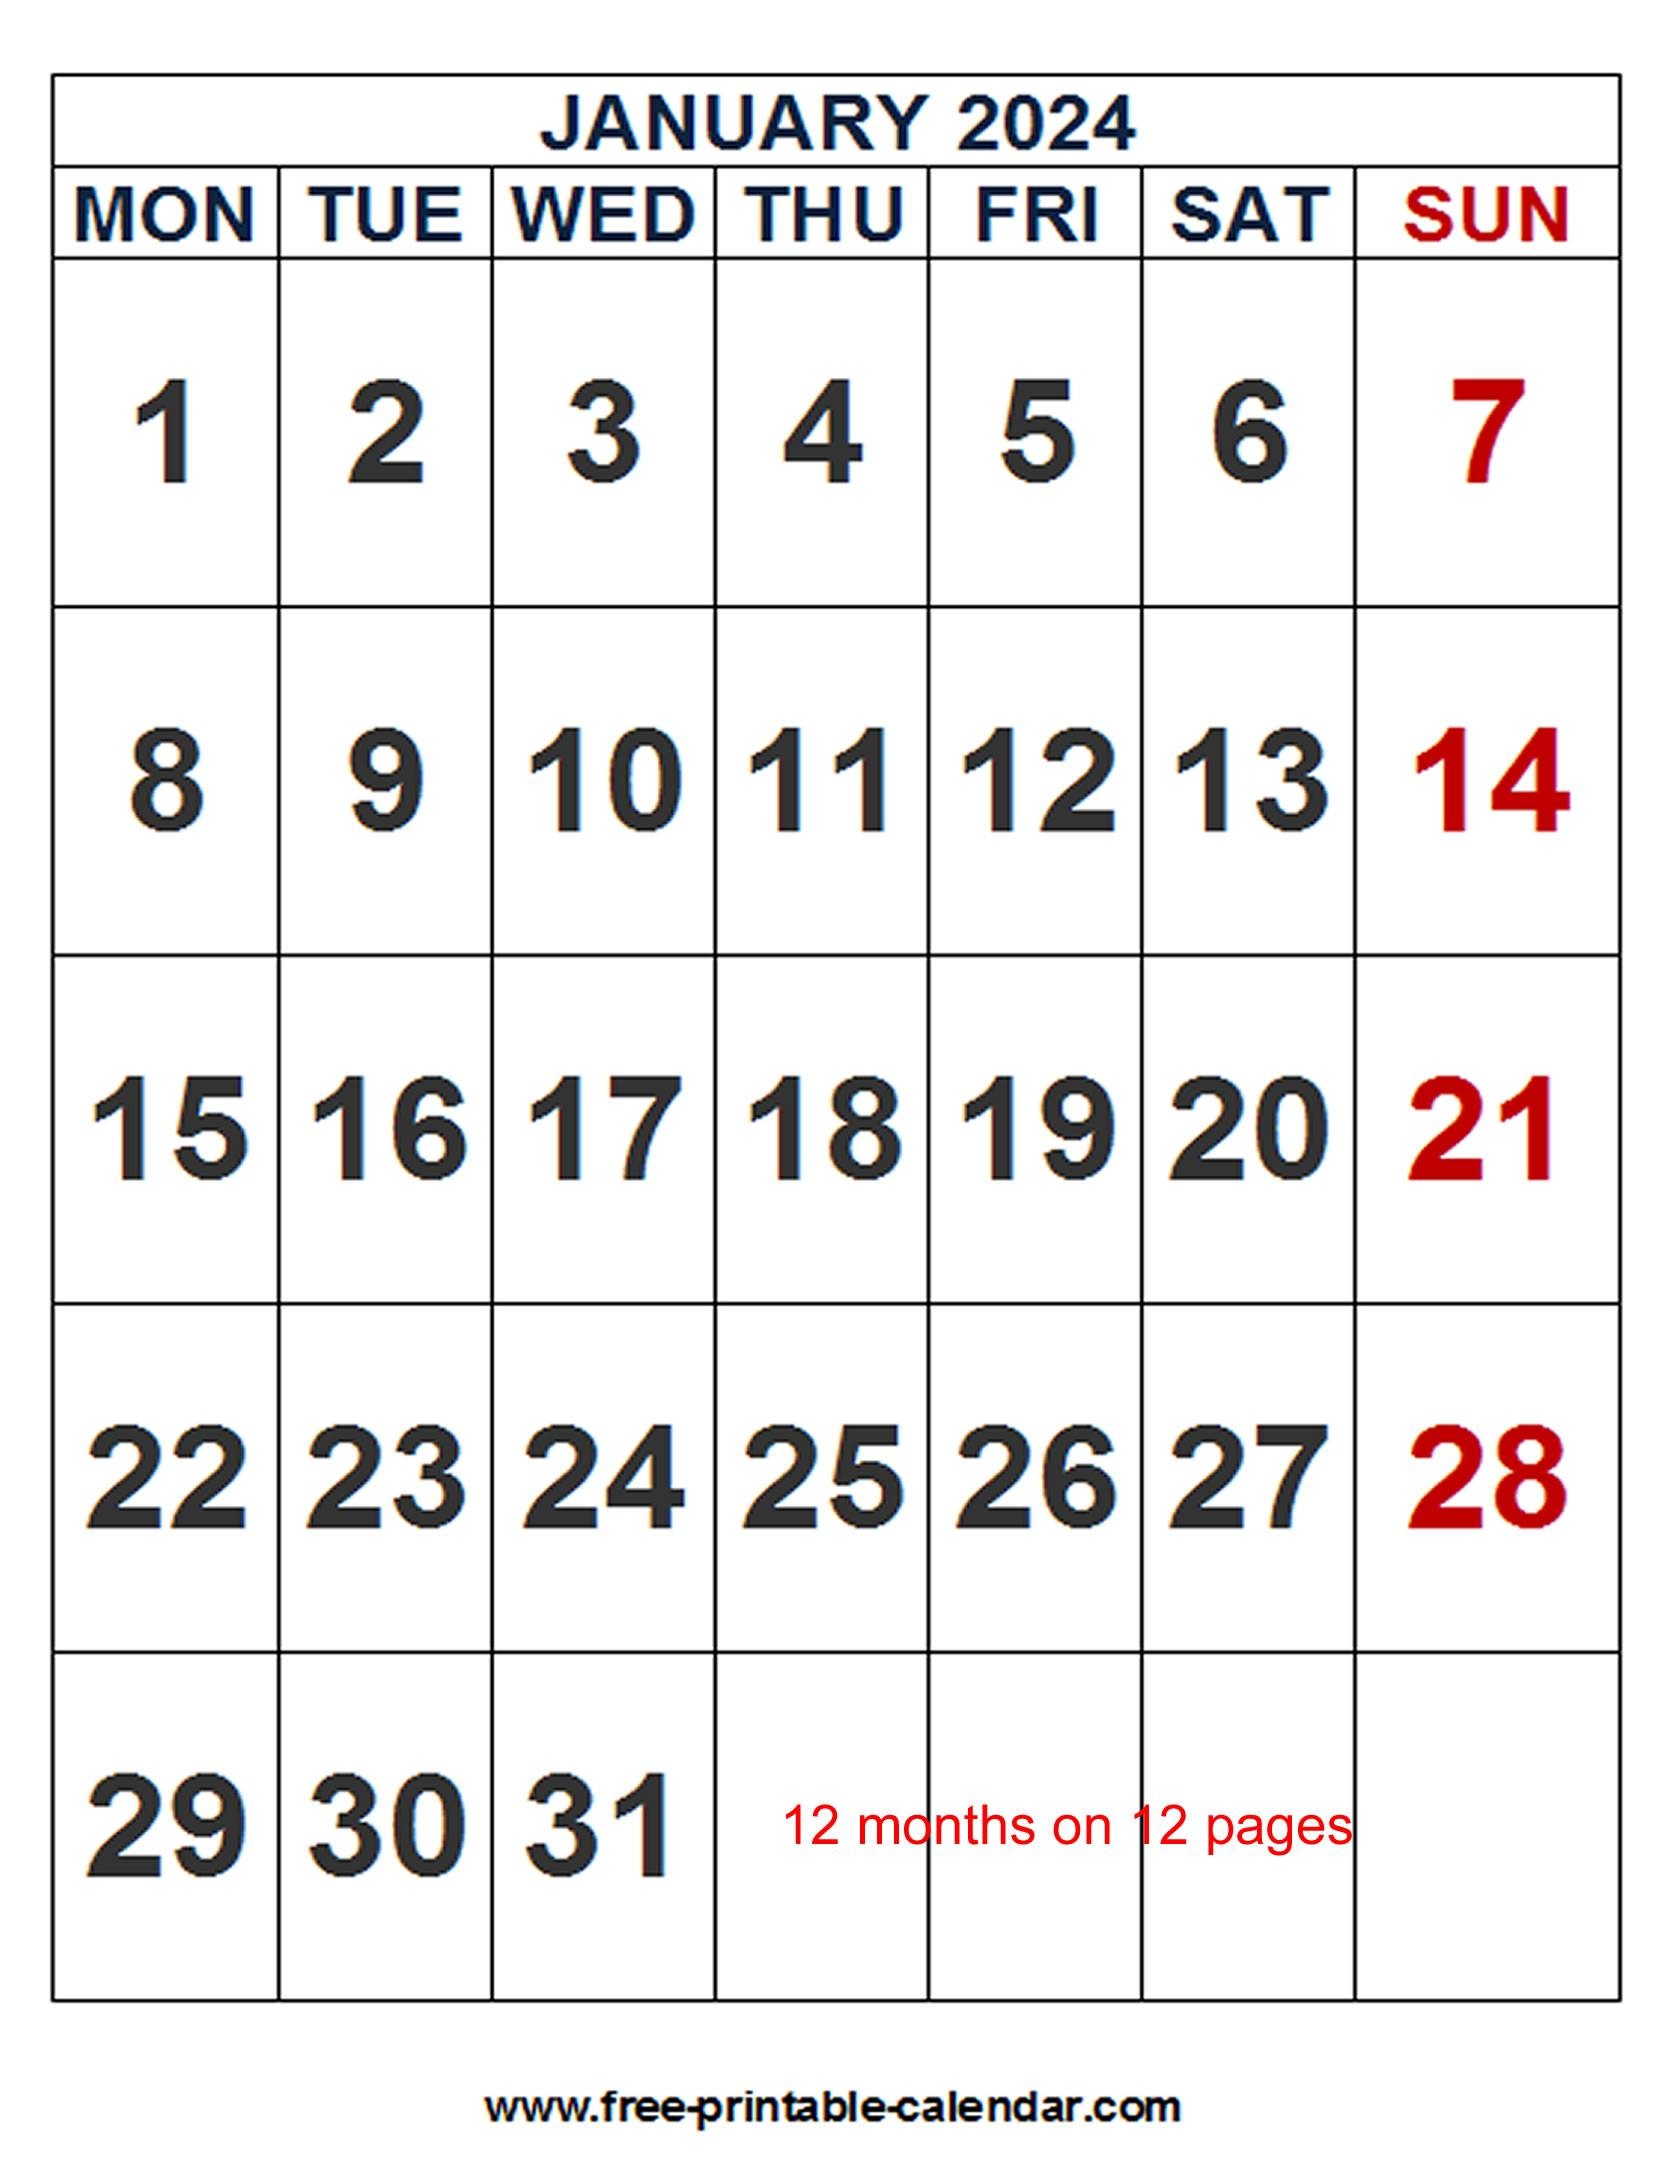 2024 Calendar Word Template - Free-Printable-Calendar in Free Printable And Editable Calendar 2024